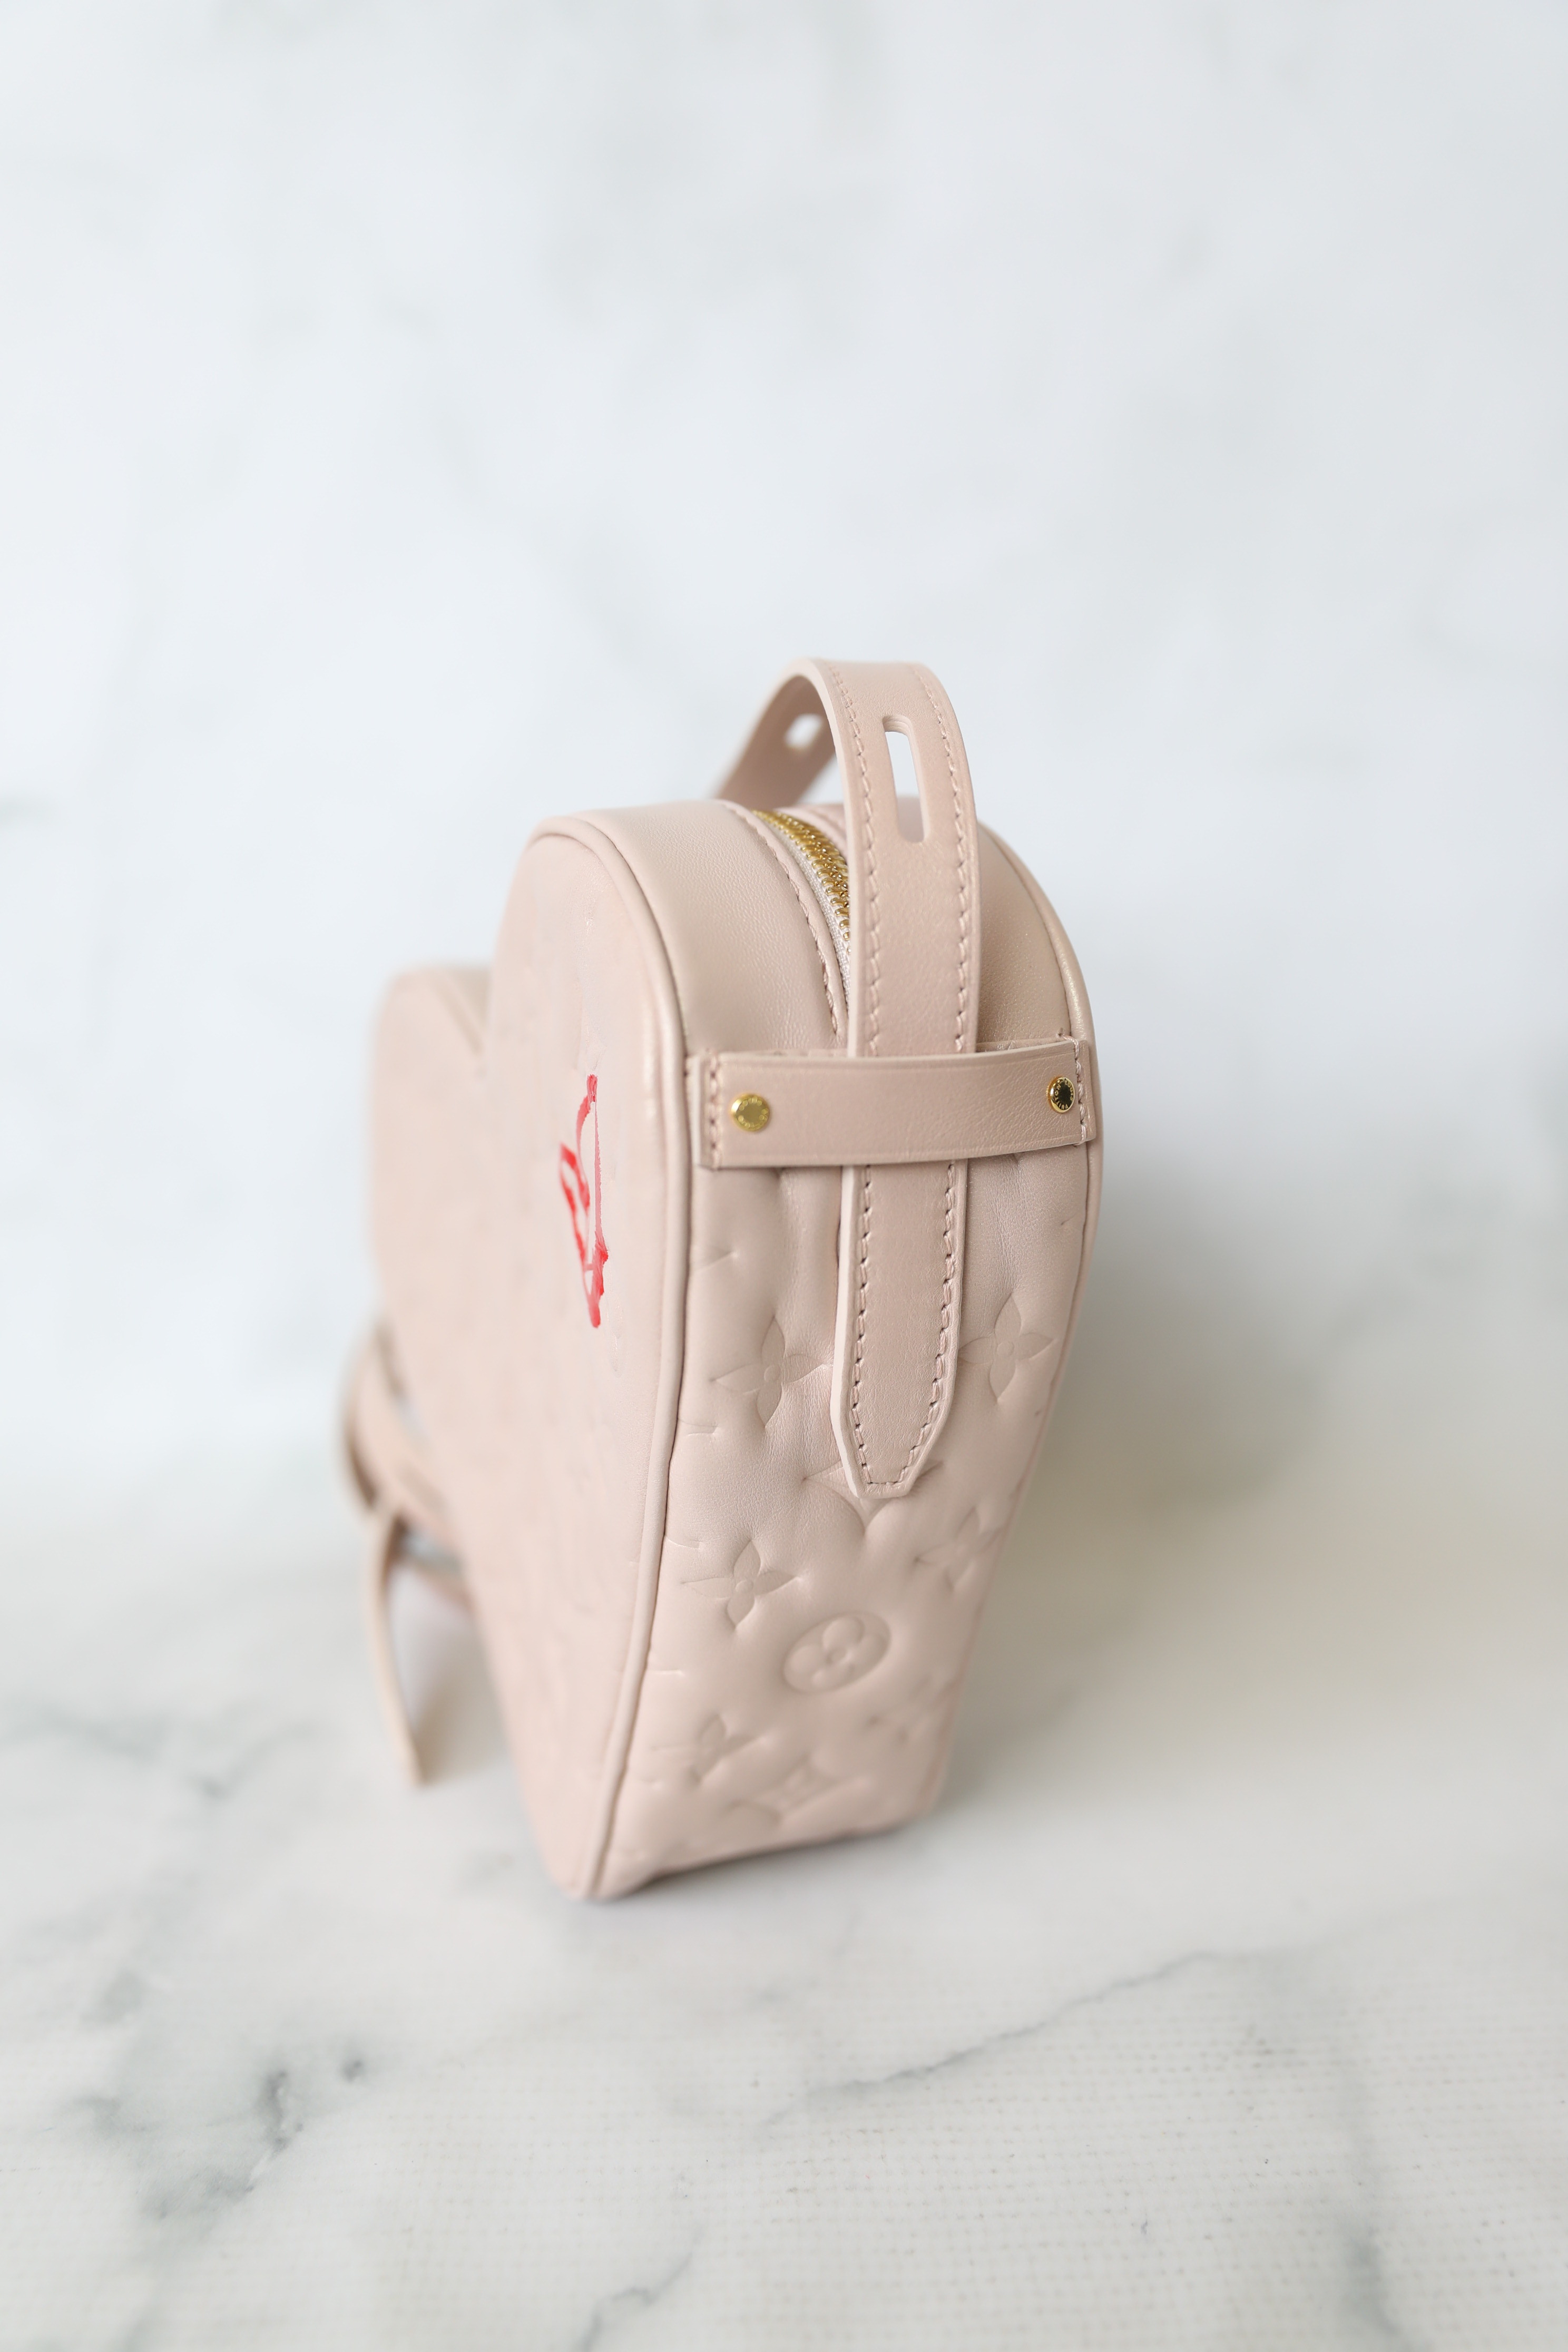 Louis Vuitton Fall in Love Heart Bag, Pink Empreinte Leather